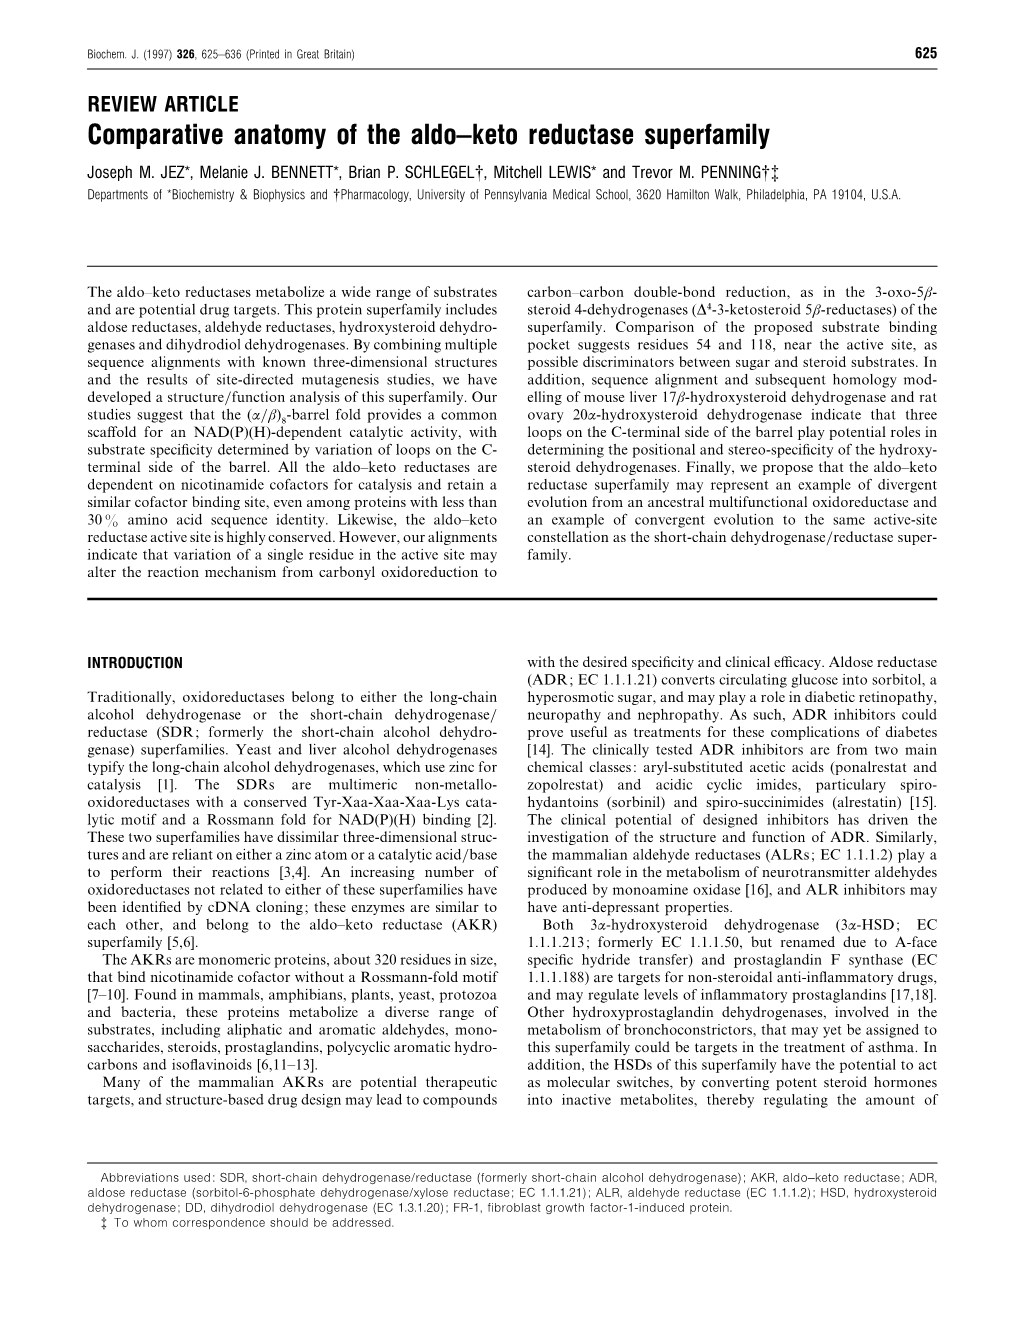 Comparative Anatomy of the Aldo–Keto Reductase Superfamily Joseph M